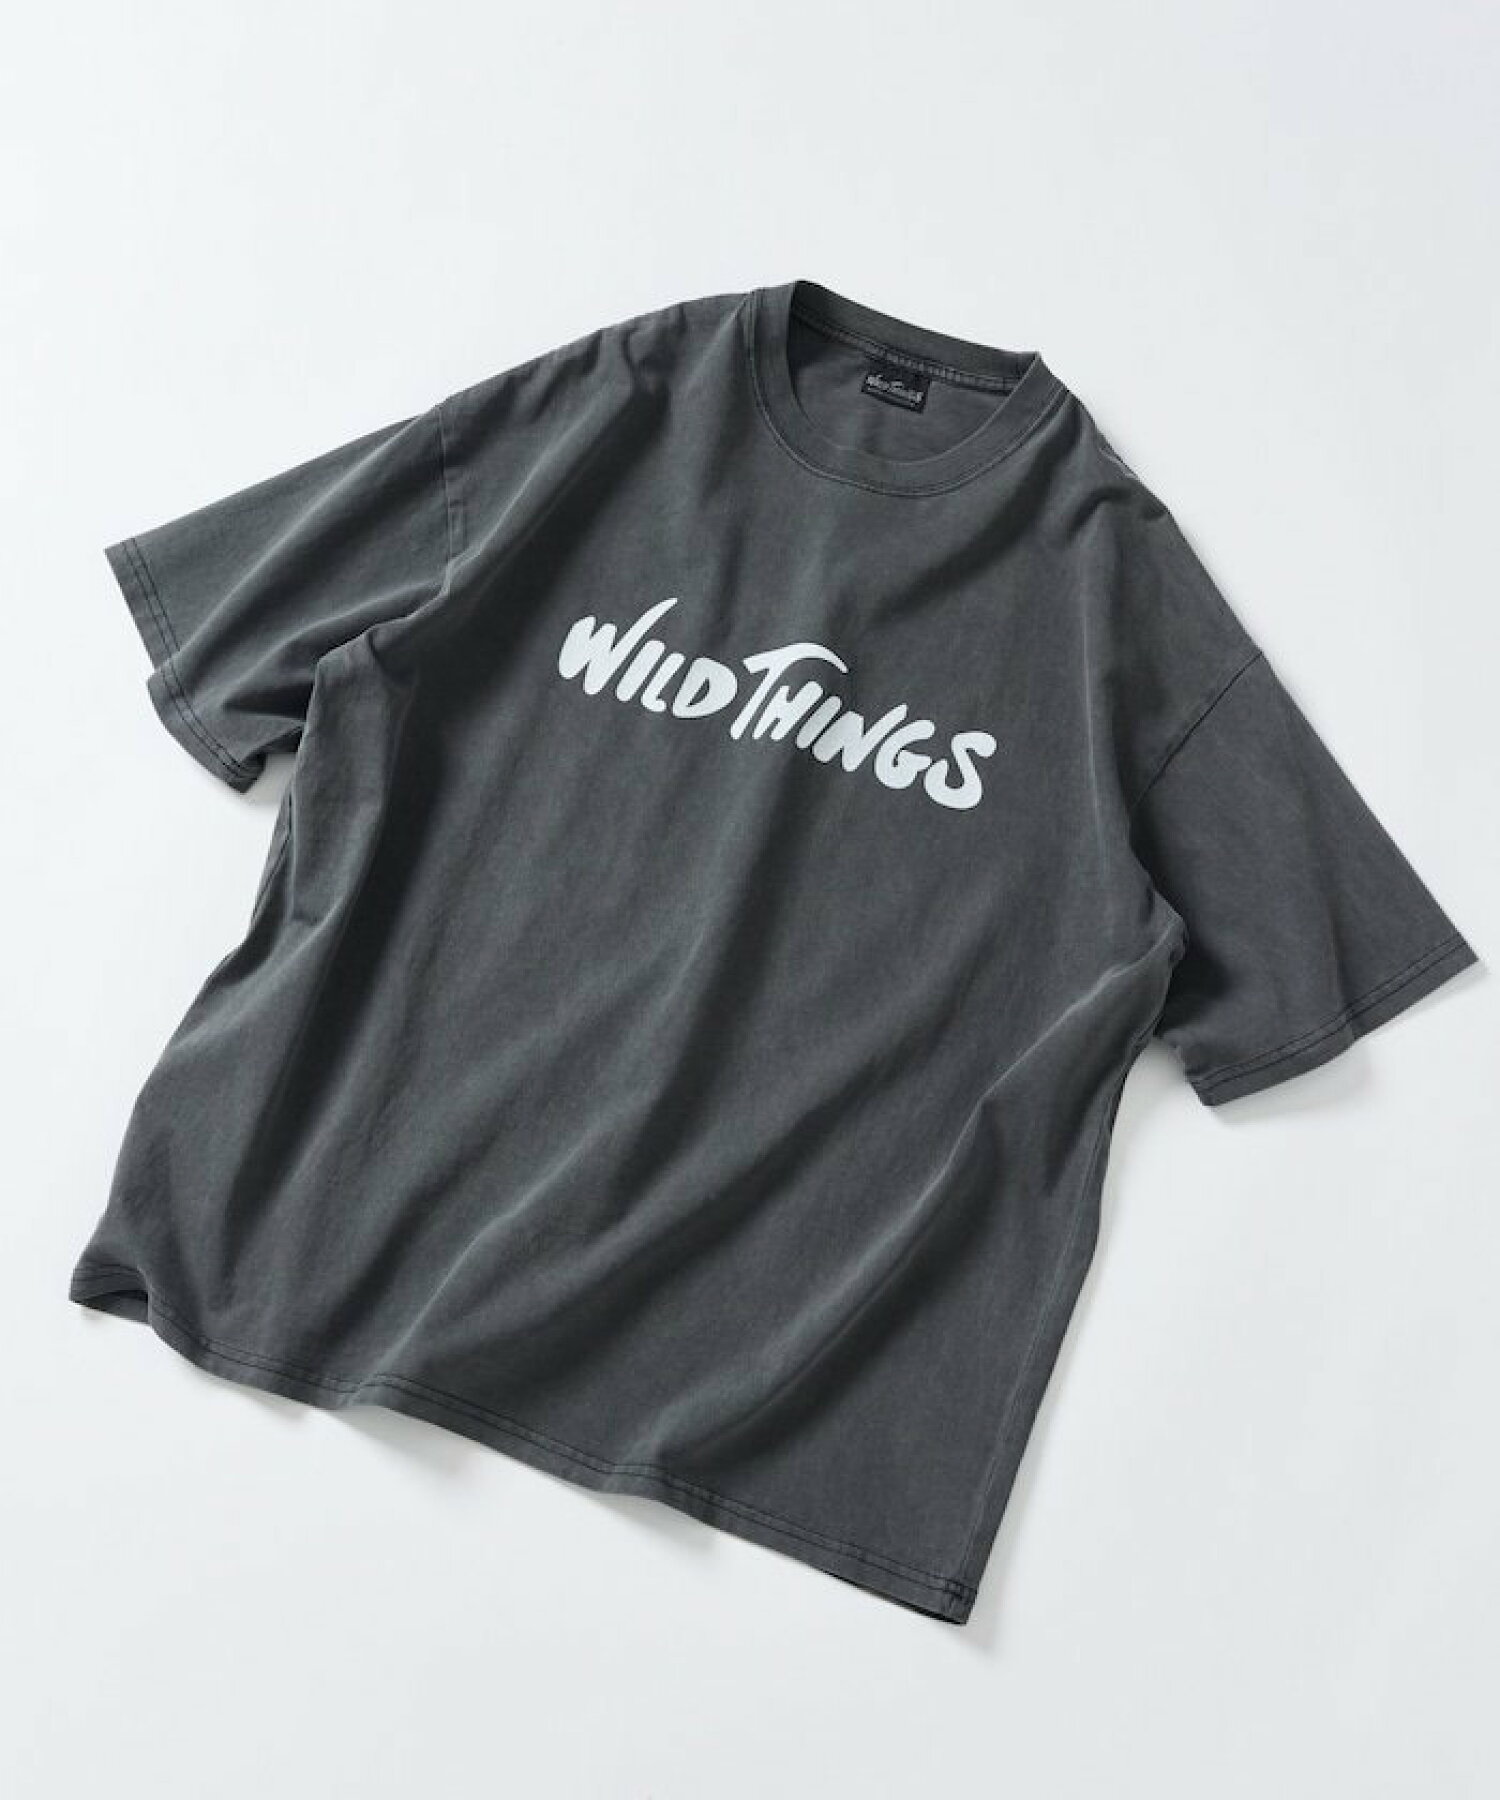 WILD THINGS×FREAK'S STORE ピグメントダイ ワンポイント ロゴプリント Tシャツ 【限定展開】